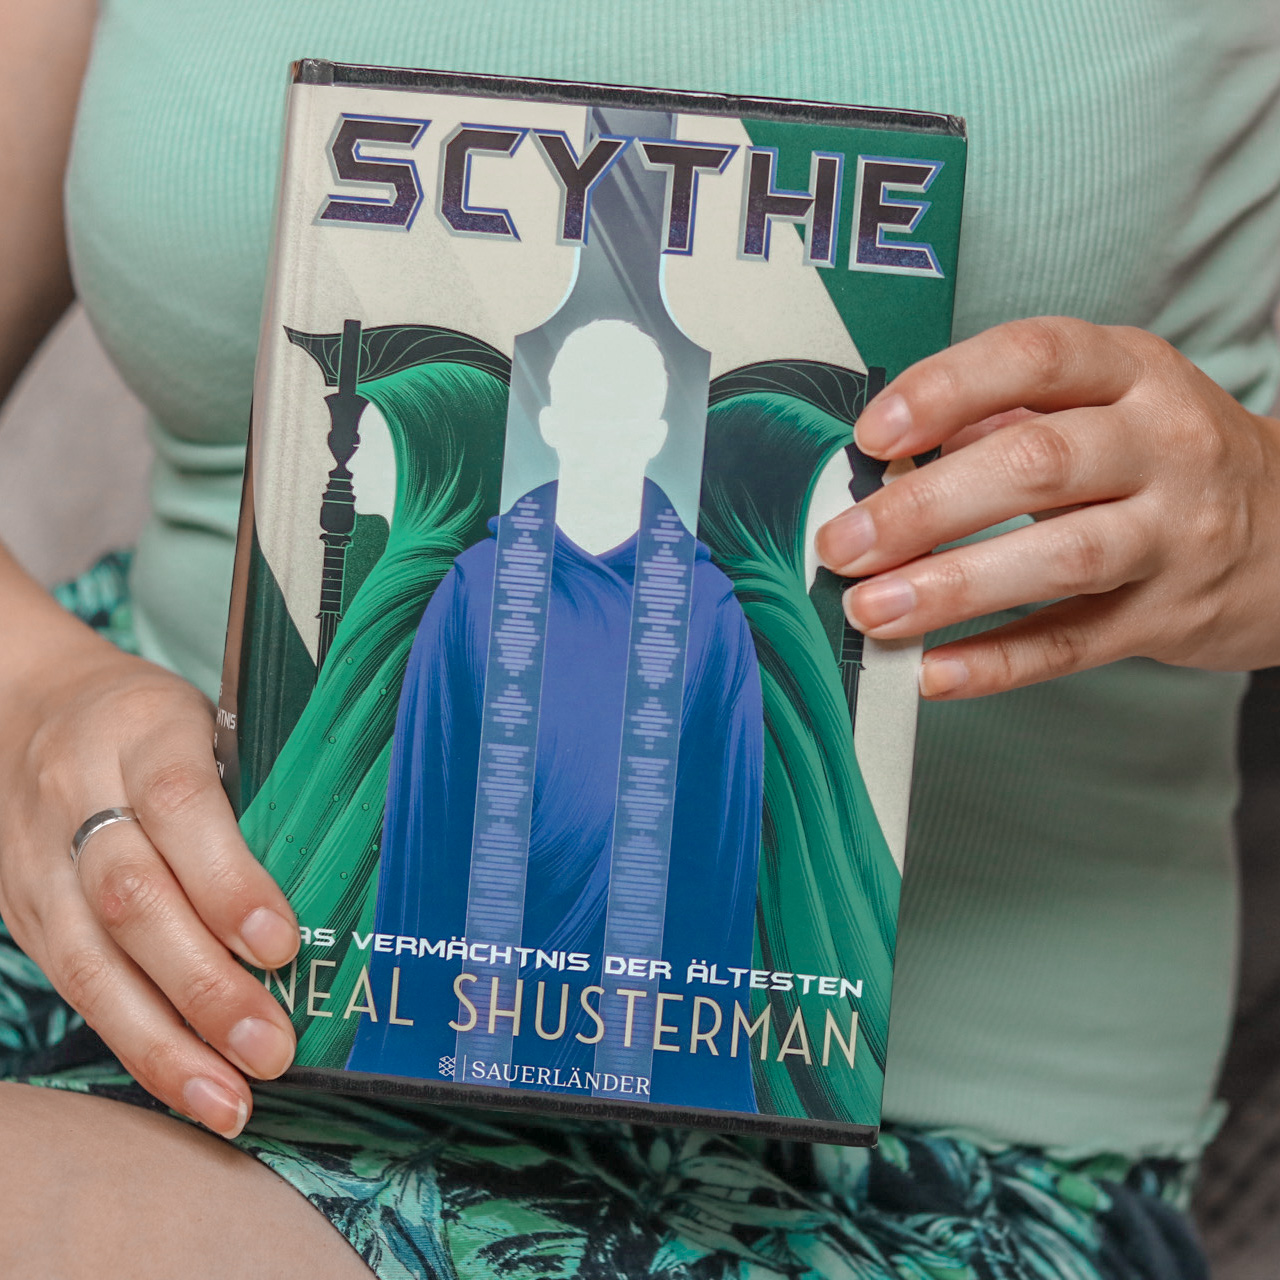 Das Vermächtnis der Ältesten – Scythe| Neal Shusterman